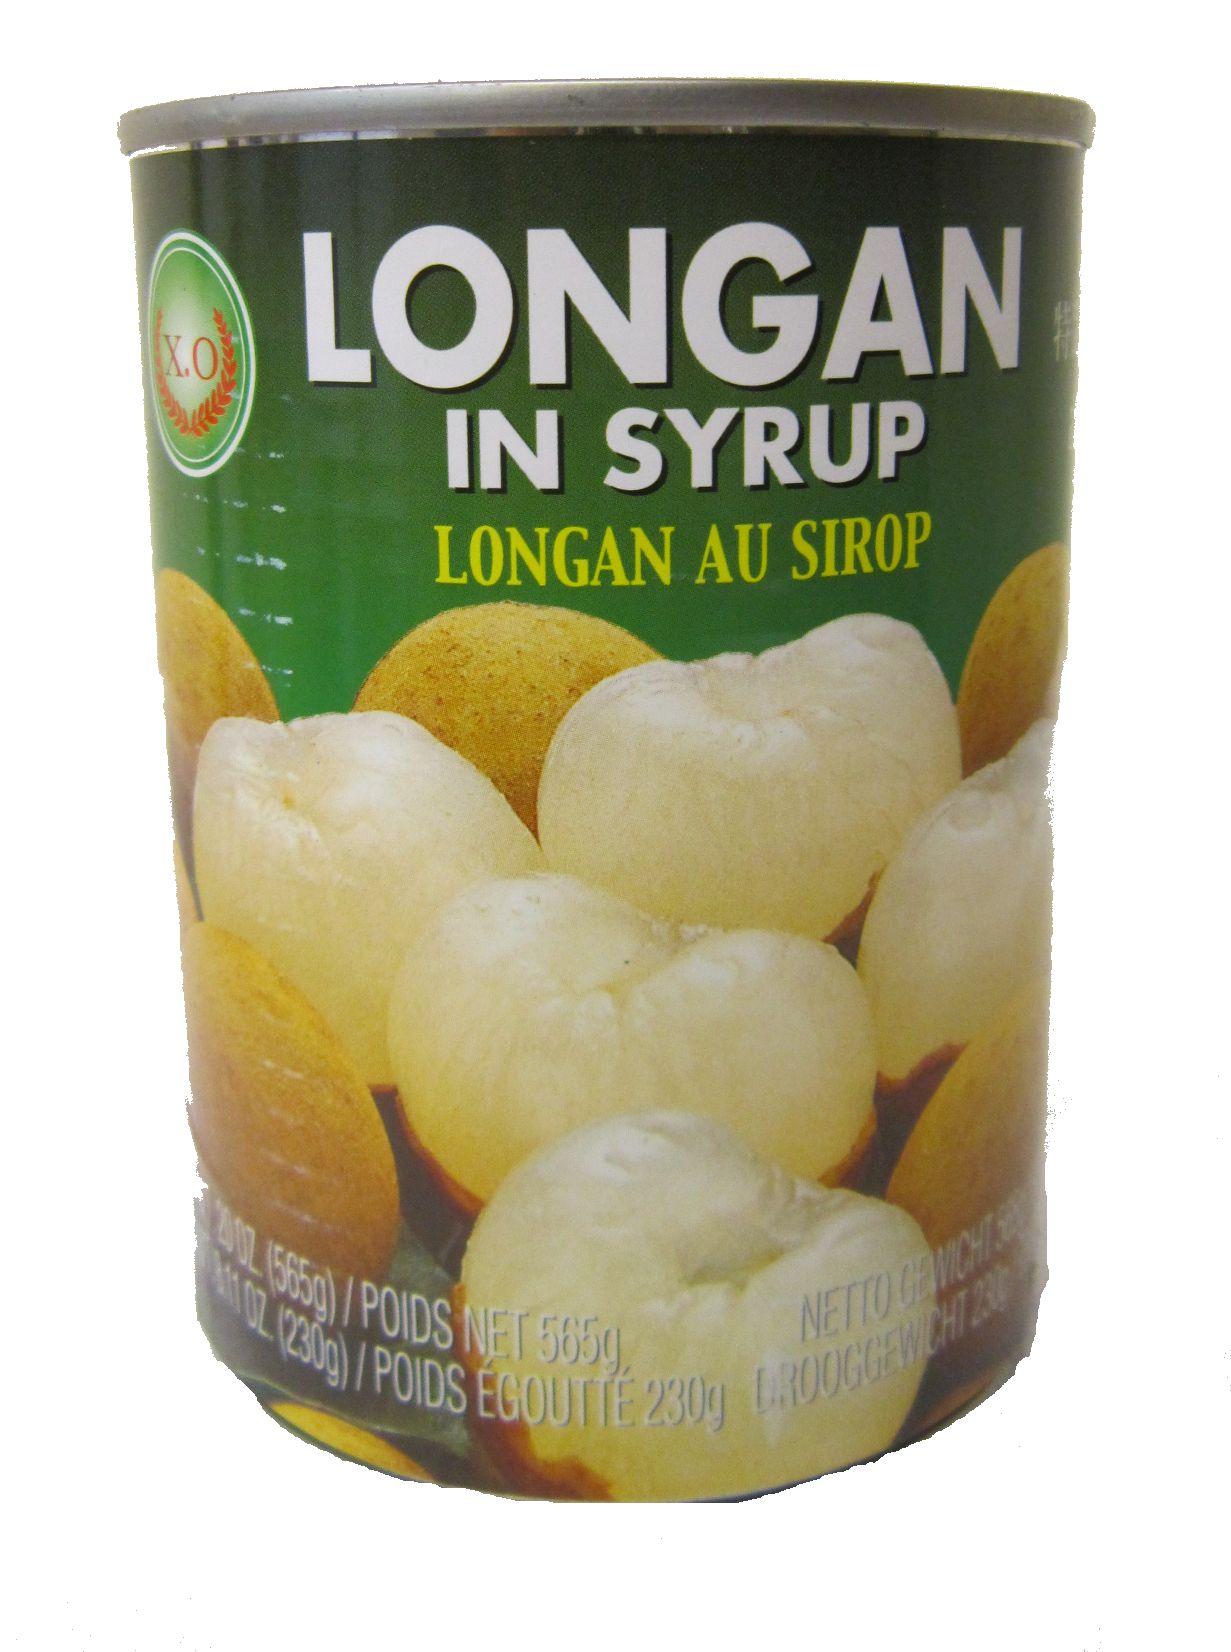 X.O Longan in Syrup Image